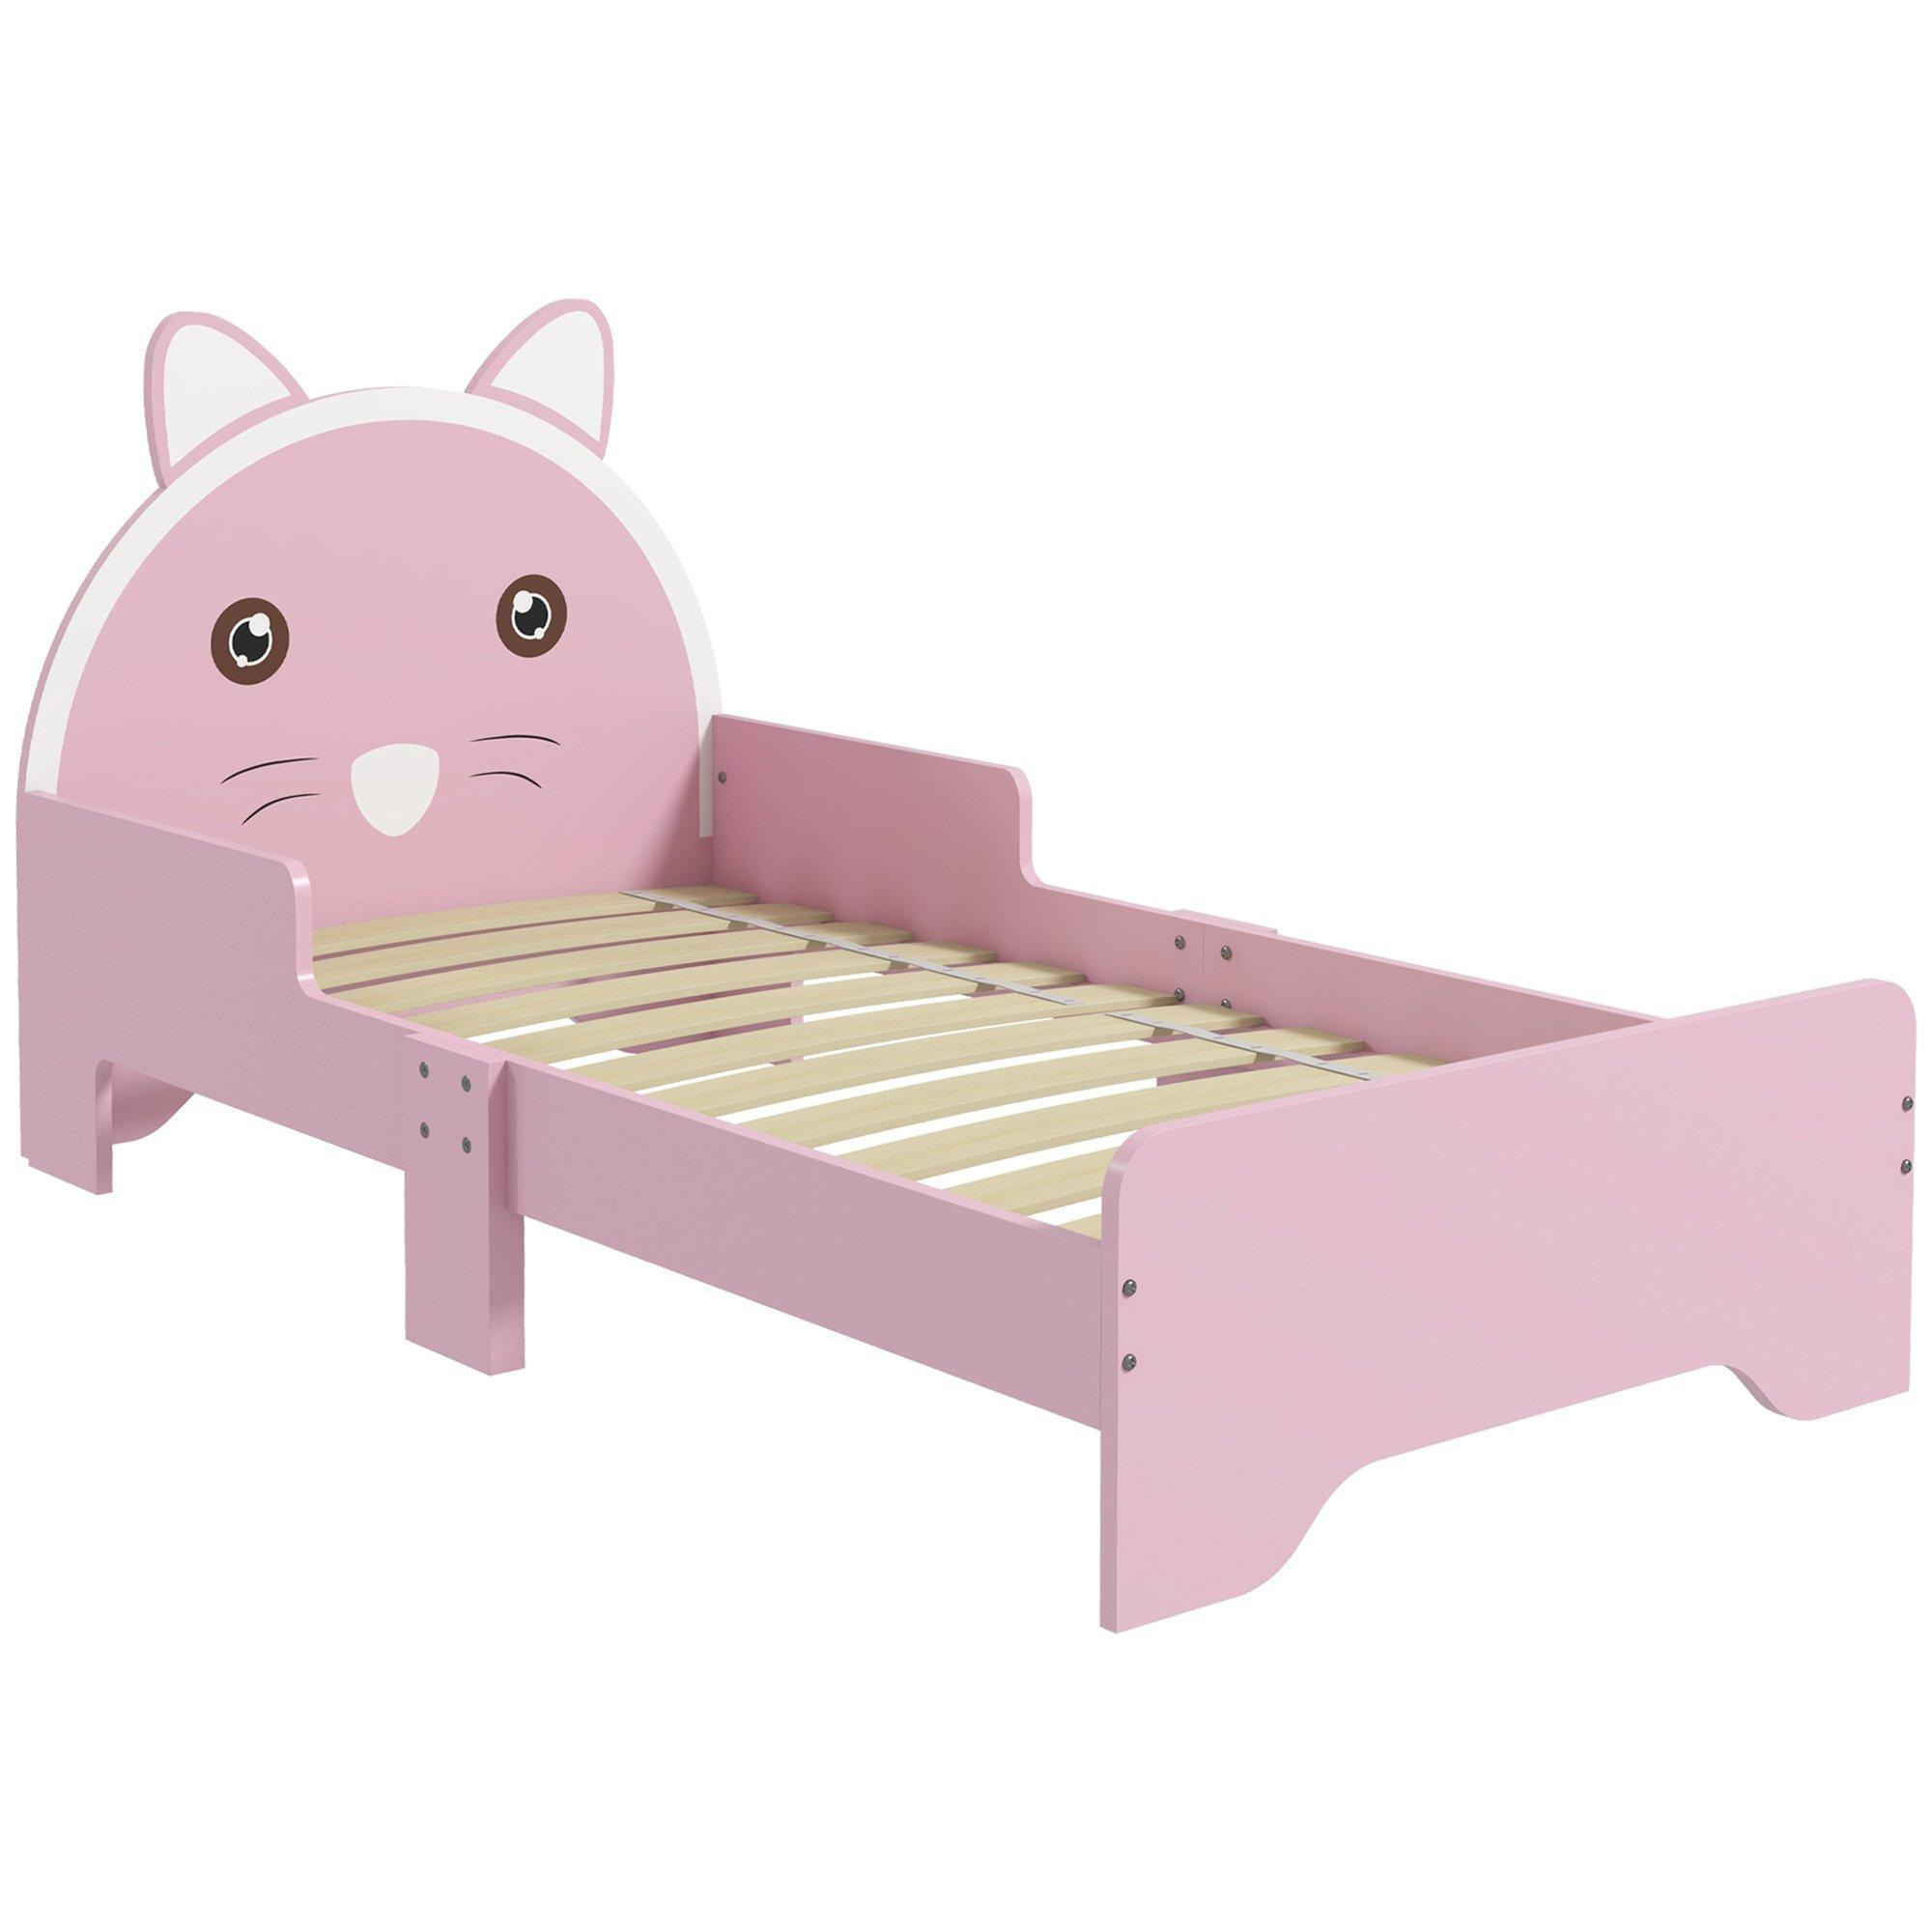 Toddler Bed Frame Cat Design Bed with Guardrails 143L x 74W x 72Hcm - Pink - image 1